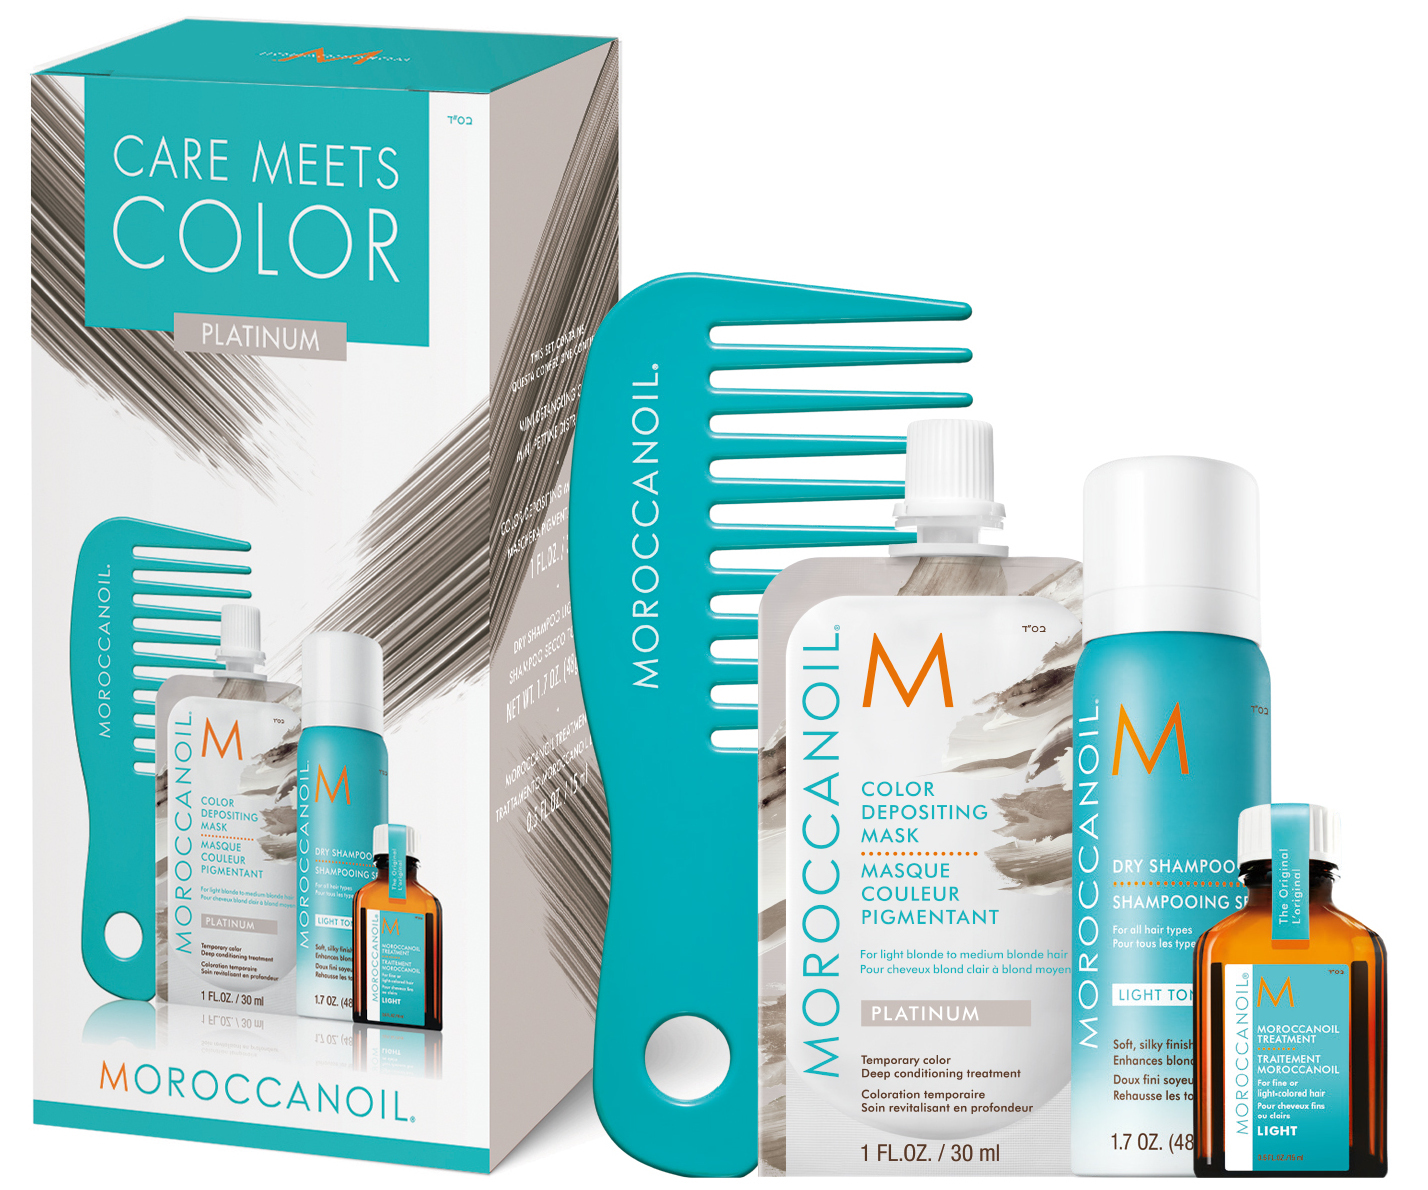 Sada pro oživení vlasů Moroccanoil Care Meets Color Platinum - hřeben, maska, suchý šampon, olej (CDMKIT21PL) + DÁREK ZDARMA